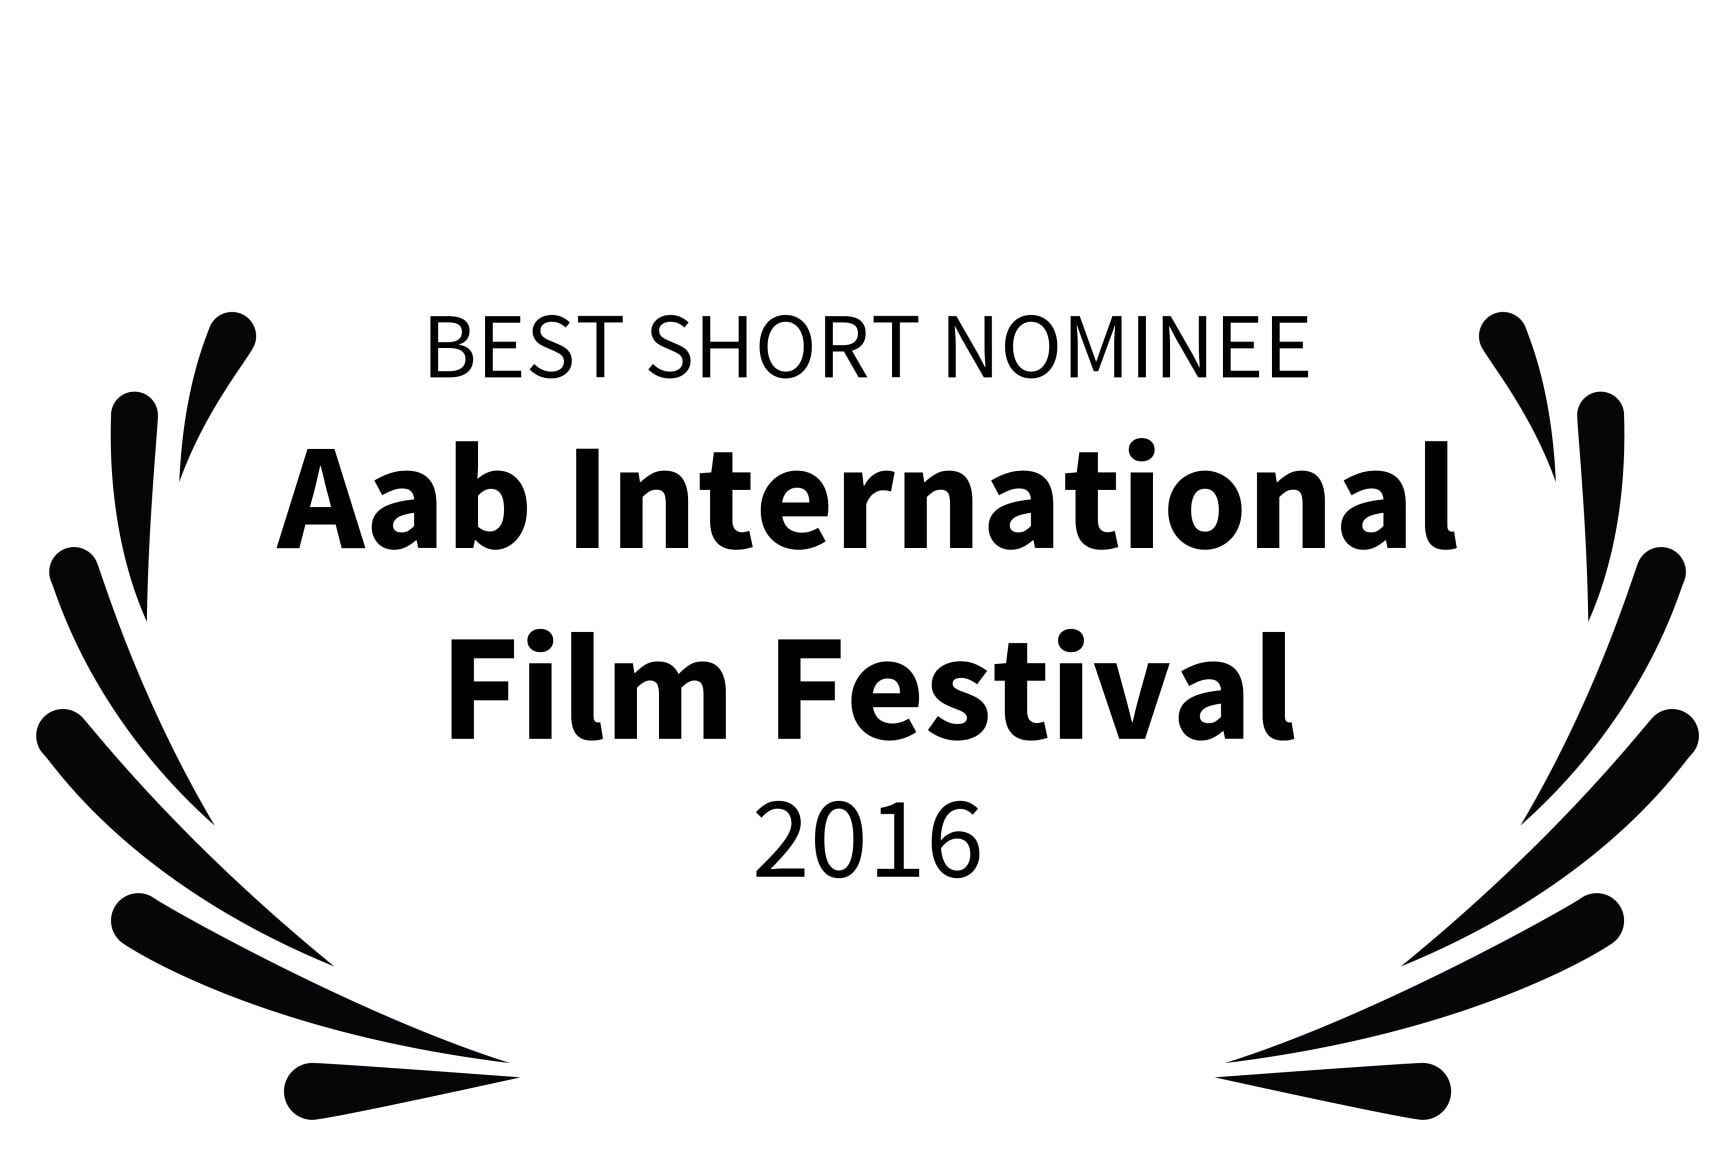 TBEST SHORT NOMINEE - Aab International Film Festival - 2016